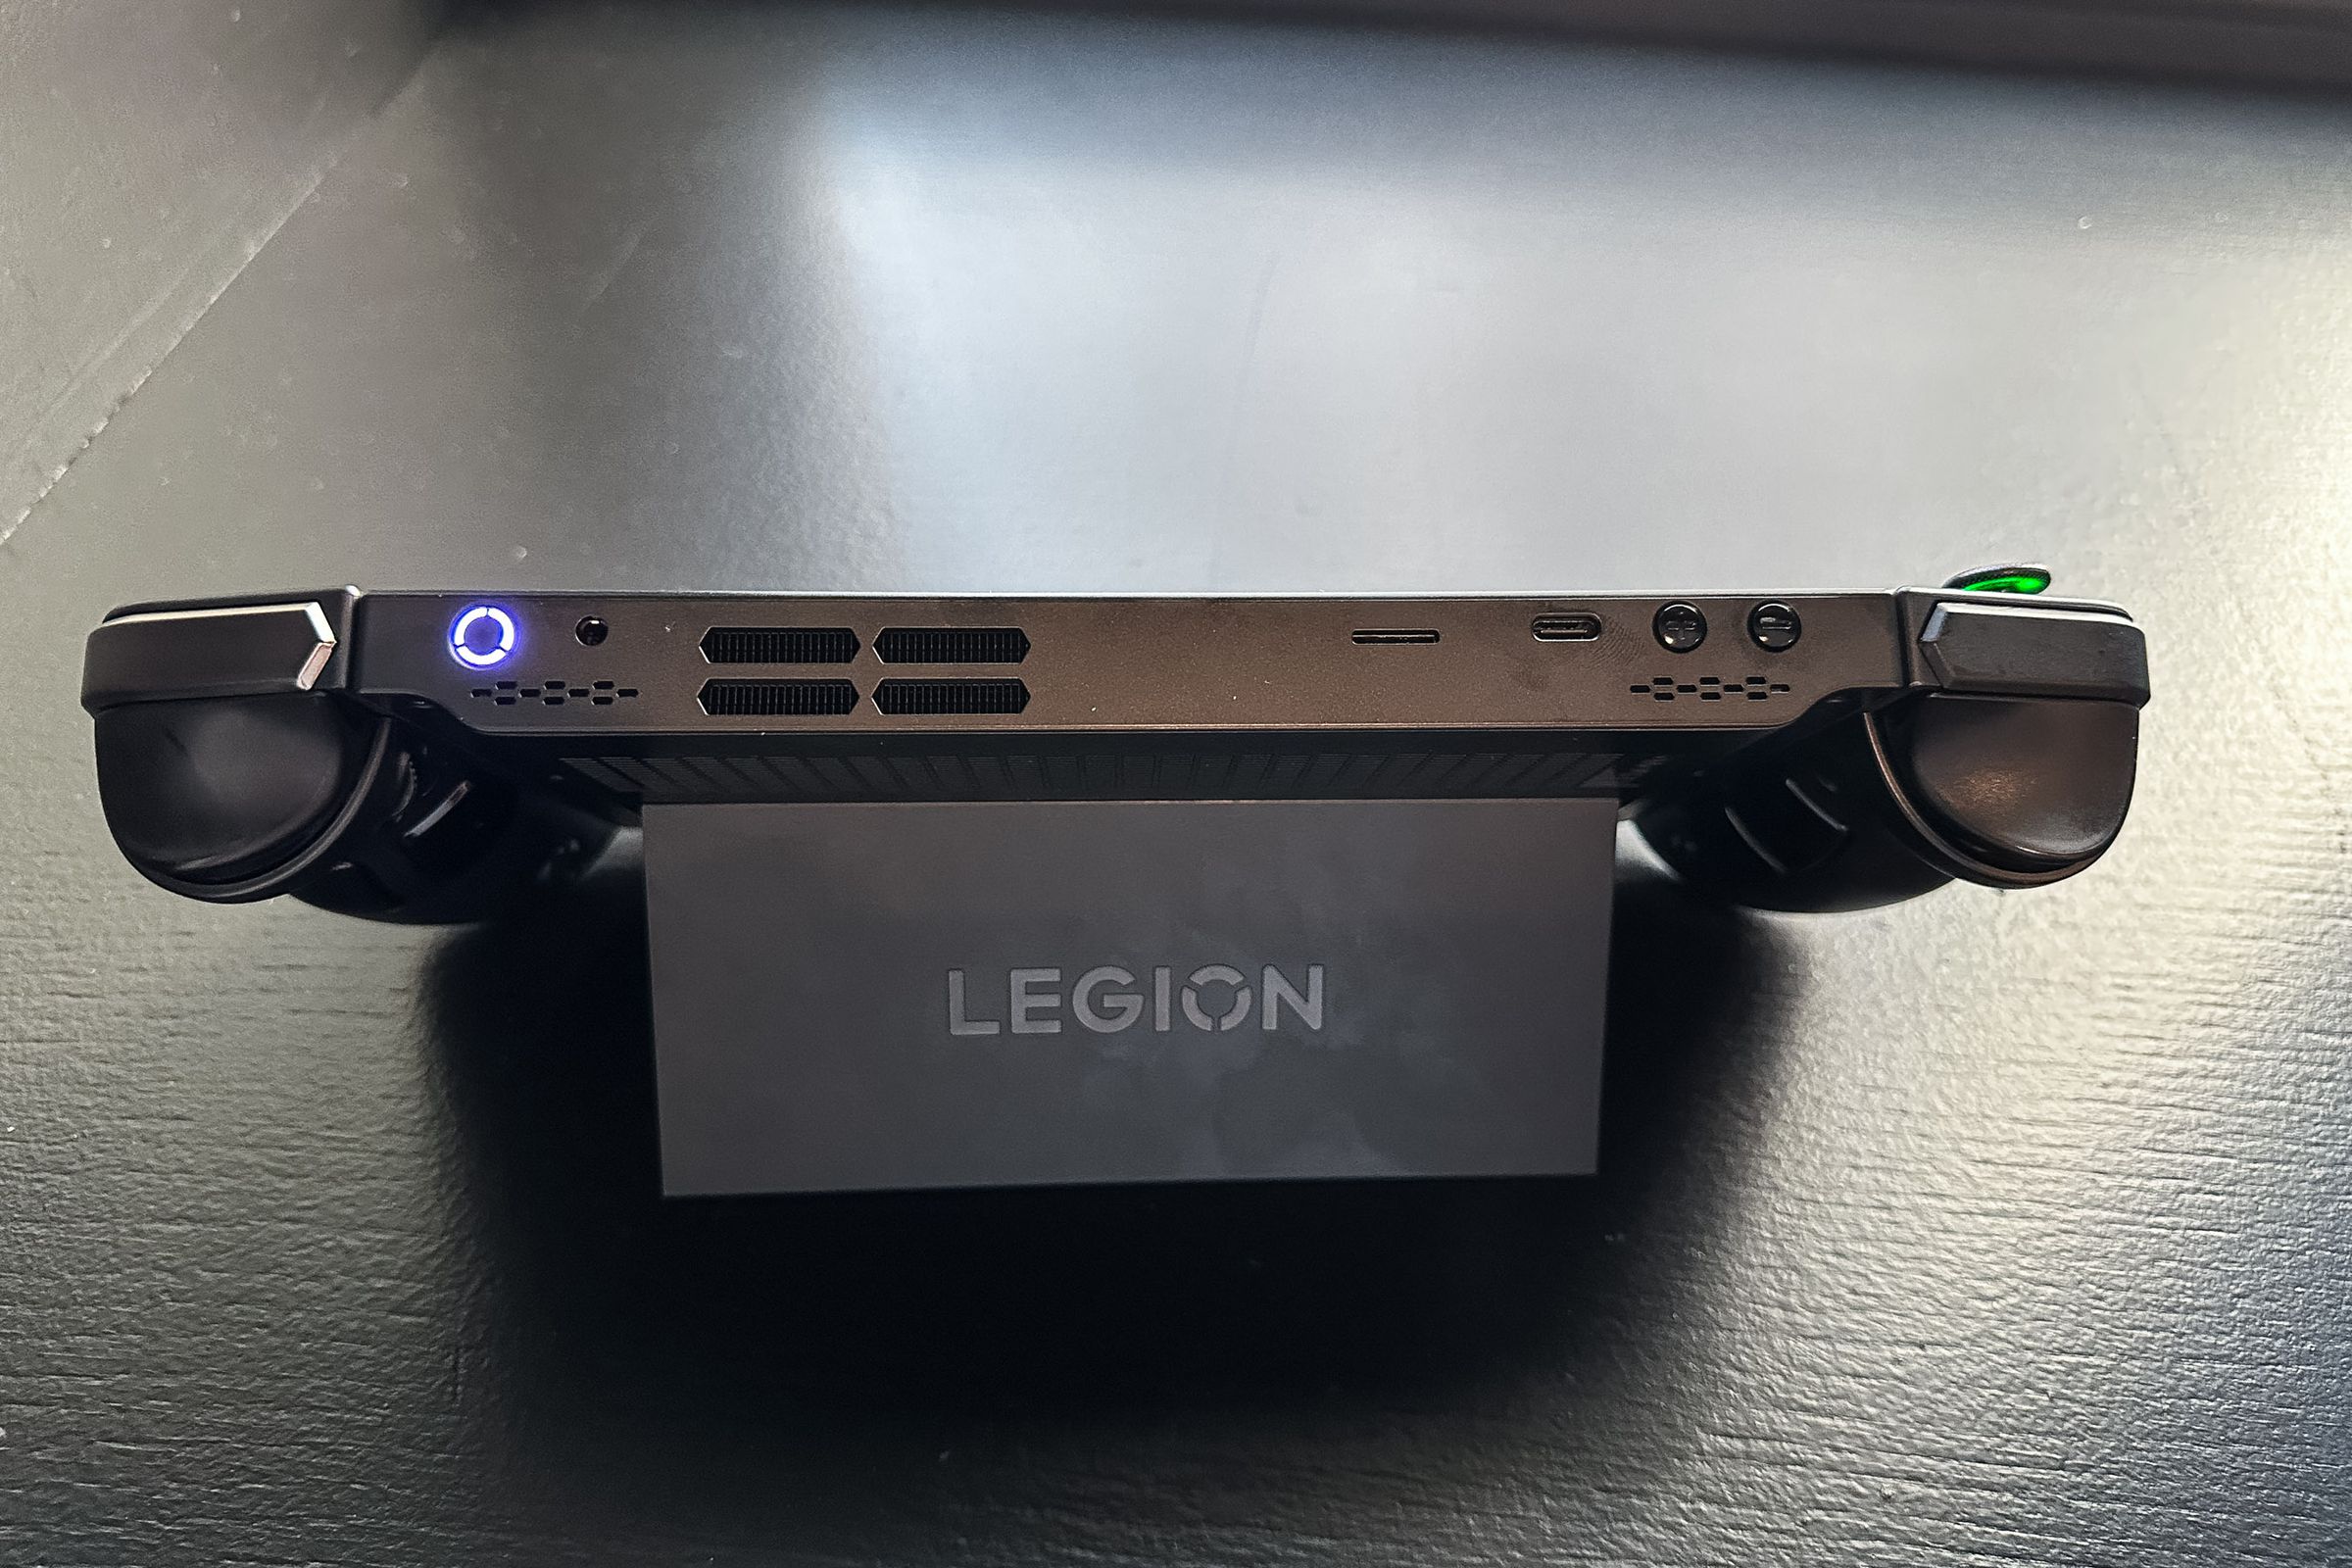 The Lenovo Legion Go kickstand seen from above.